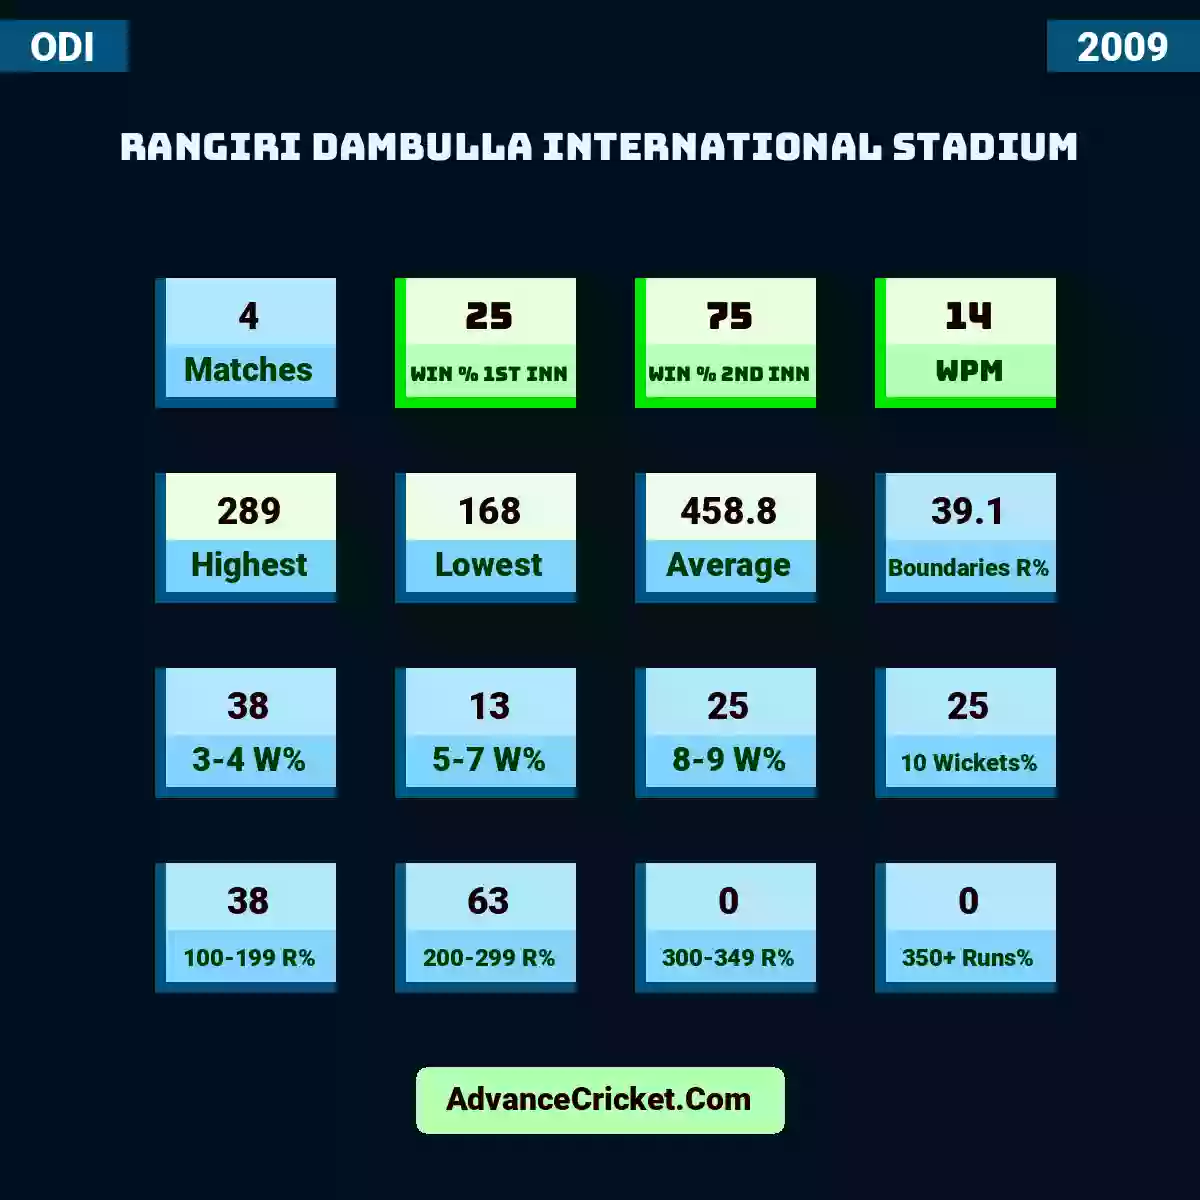 Image showing Rangiri Dambulla International Stadium with Matches: 4, Win % 1st Inn: 25, Win % 2nd Inn: 75, WPM: 14, Highest: 289, Lowest: 168, Average: 458.8, Boundaries R%: 39.1, 3-4 W%: 38, 5-7 W%: 13, 8-9 W%: 25, 10 Wickets%: 25, 100-199 R%: 38, 200-299 R%: 63, 300-349 R%: 0, 350+ Runs%: 0.